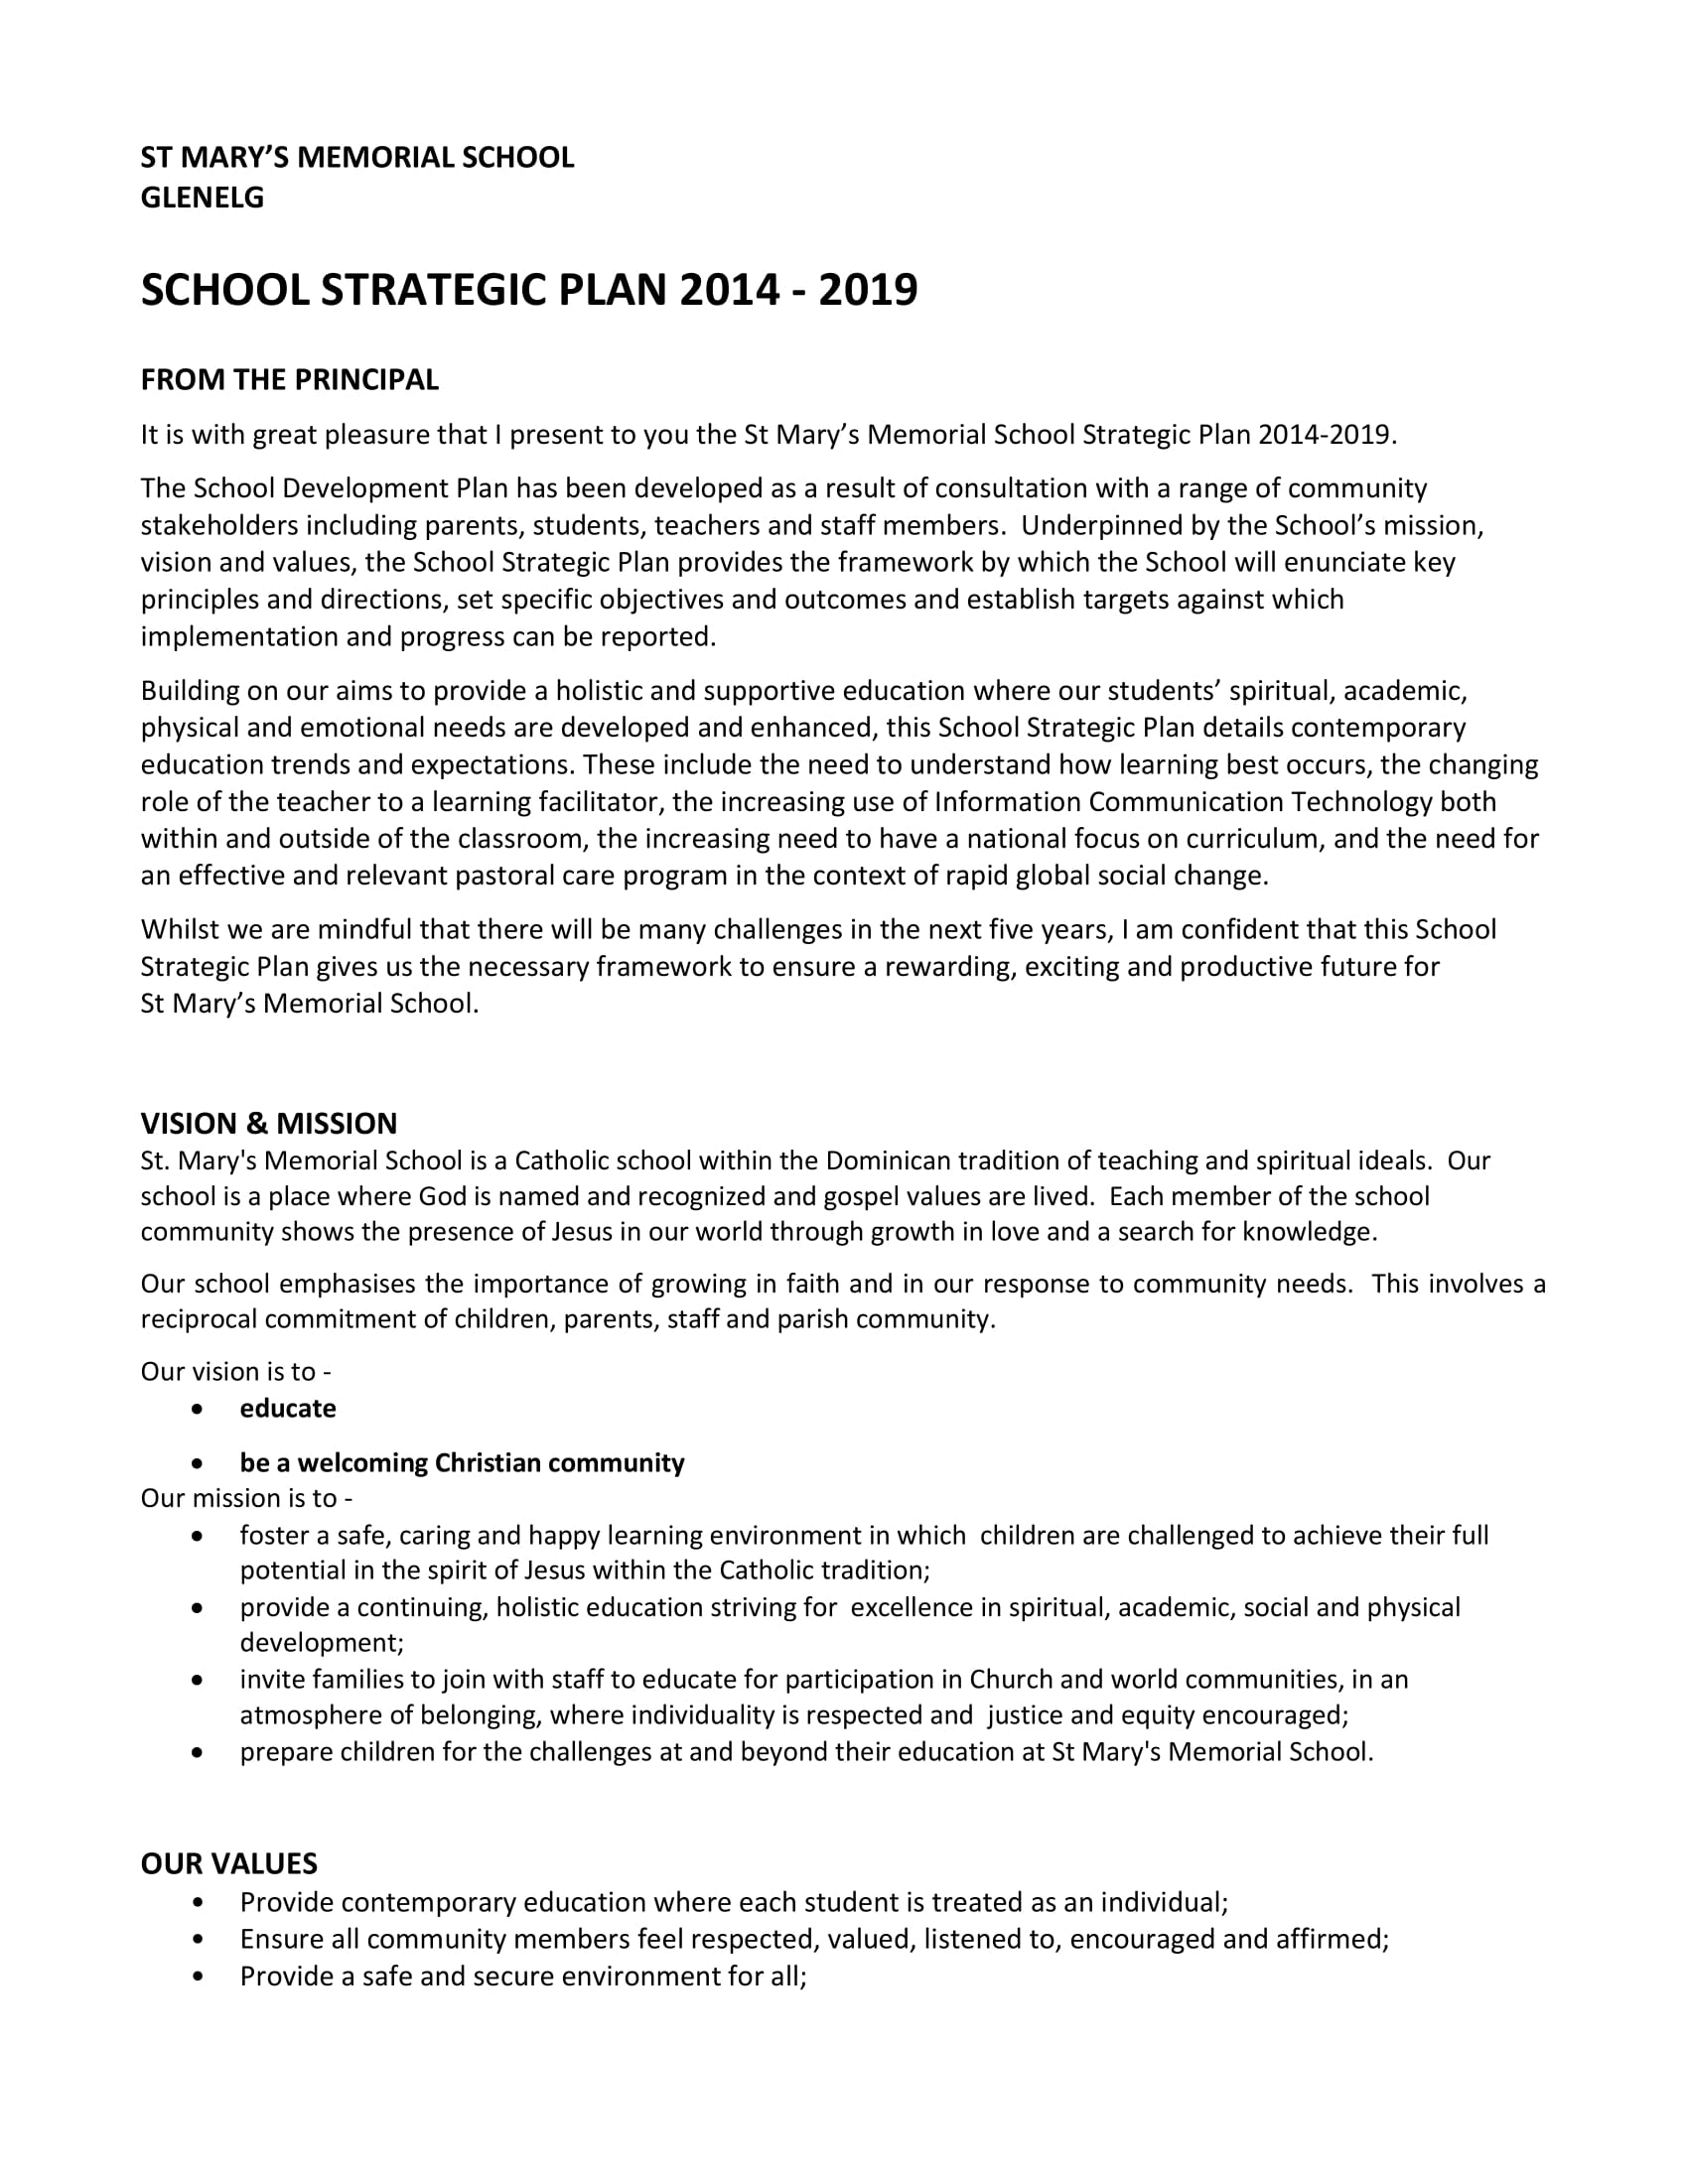 strategic plan school template